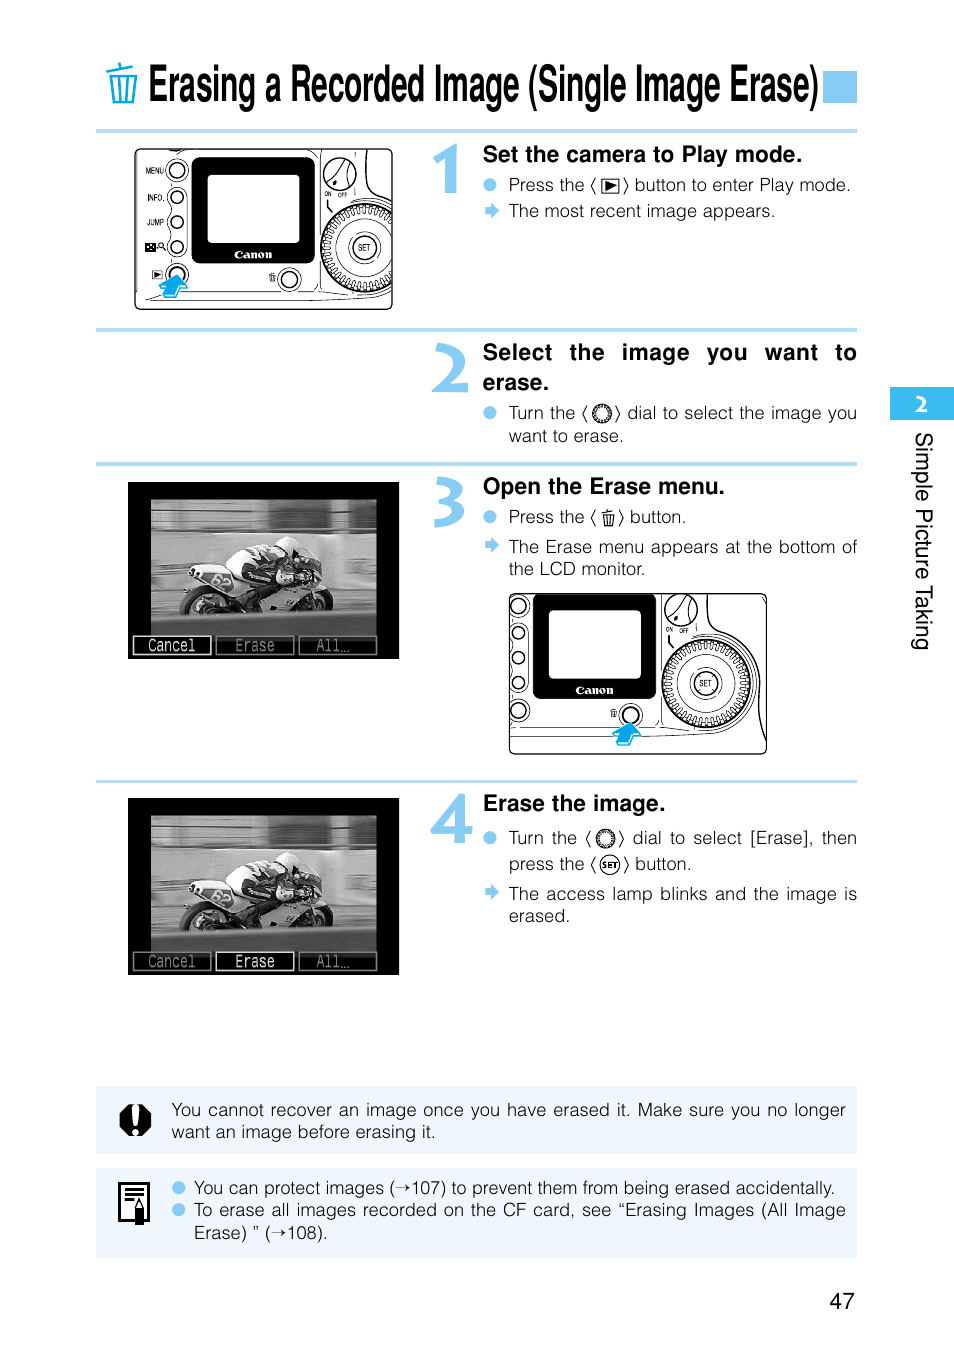 Erasing a recorded image (single image erase), Erasing a recorded image, Single image erase) | Canon EOS D30 User Manual | Page 47 / 152